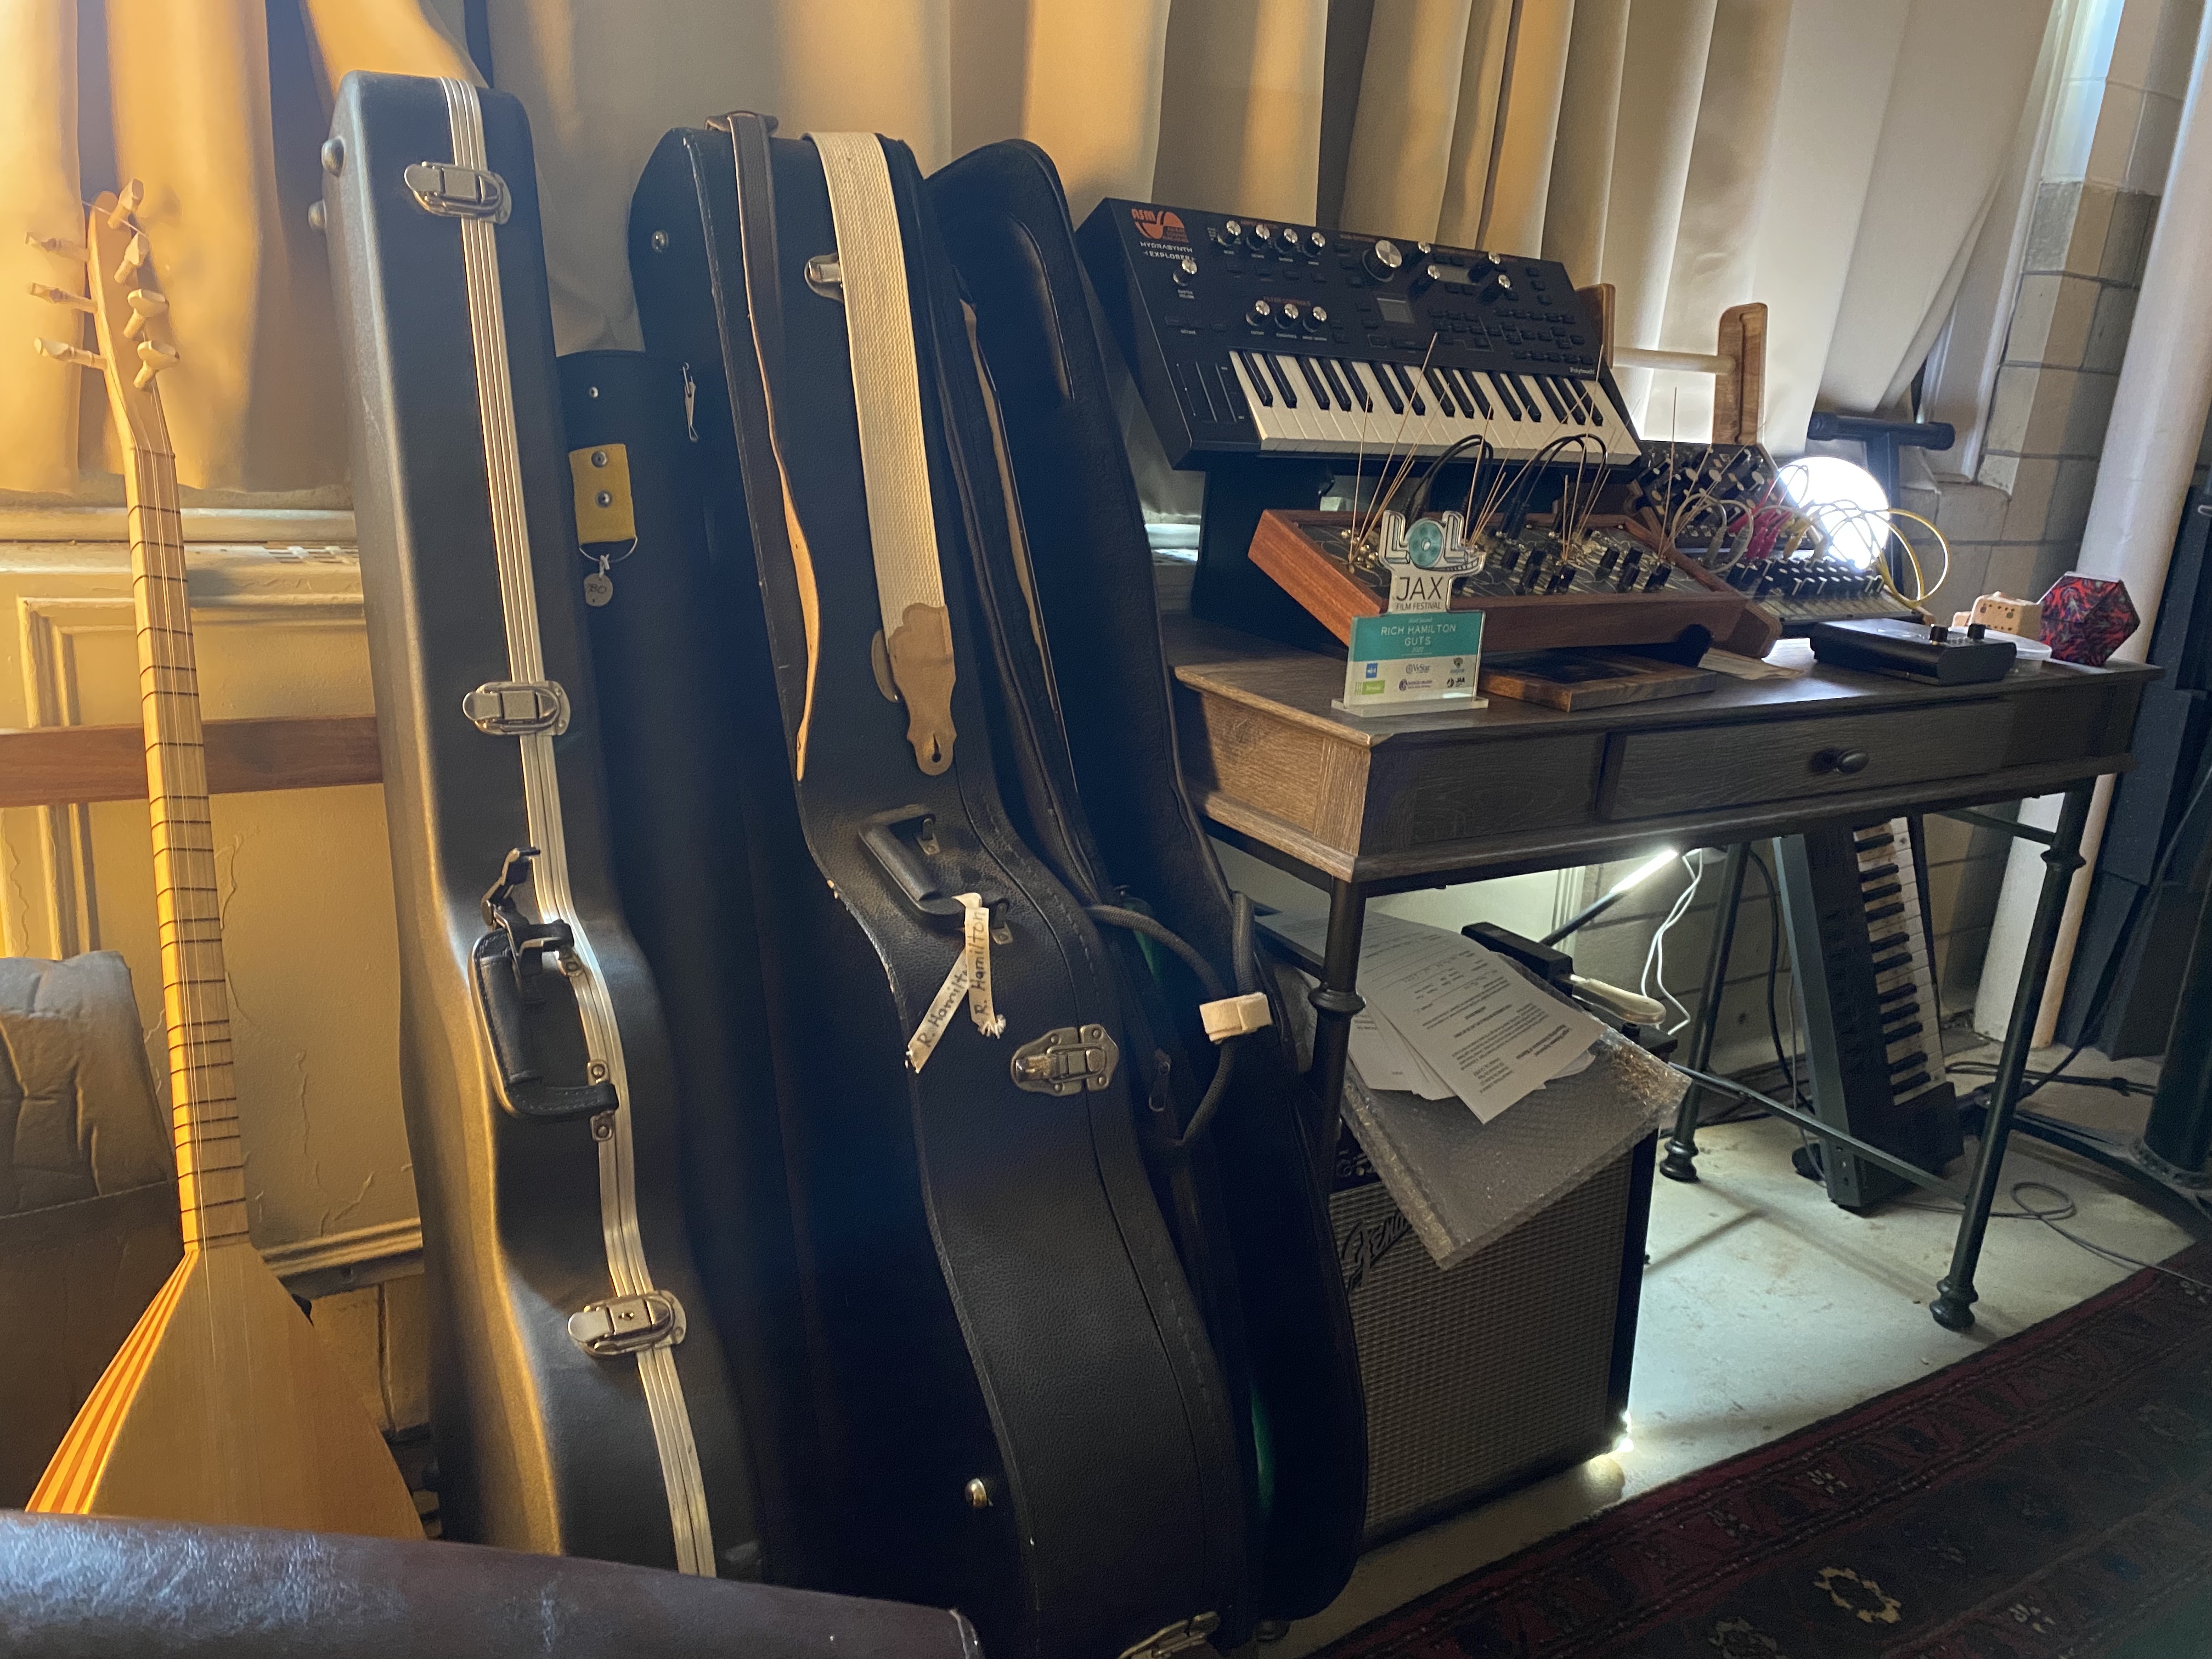 Assorted guitars and sound recording equipment in Rich Hamilton's audio studio.